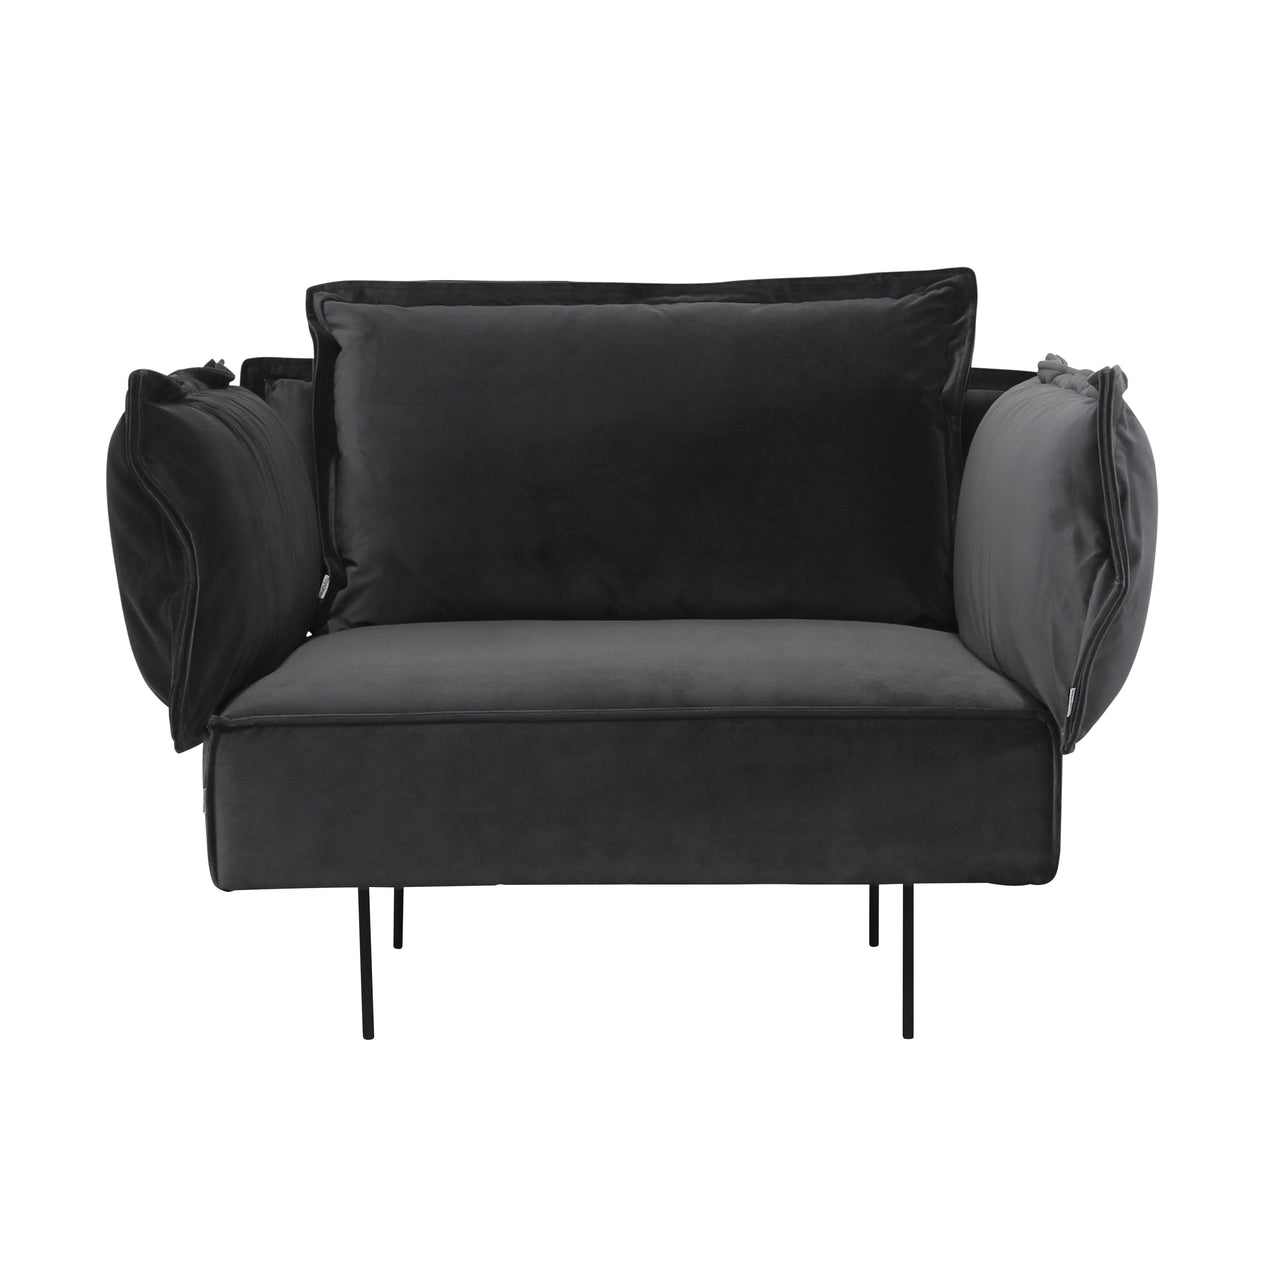 Sofa Modules: One Seat Lounge Chair + Sapphire 802